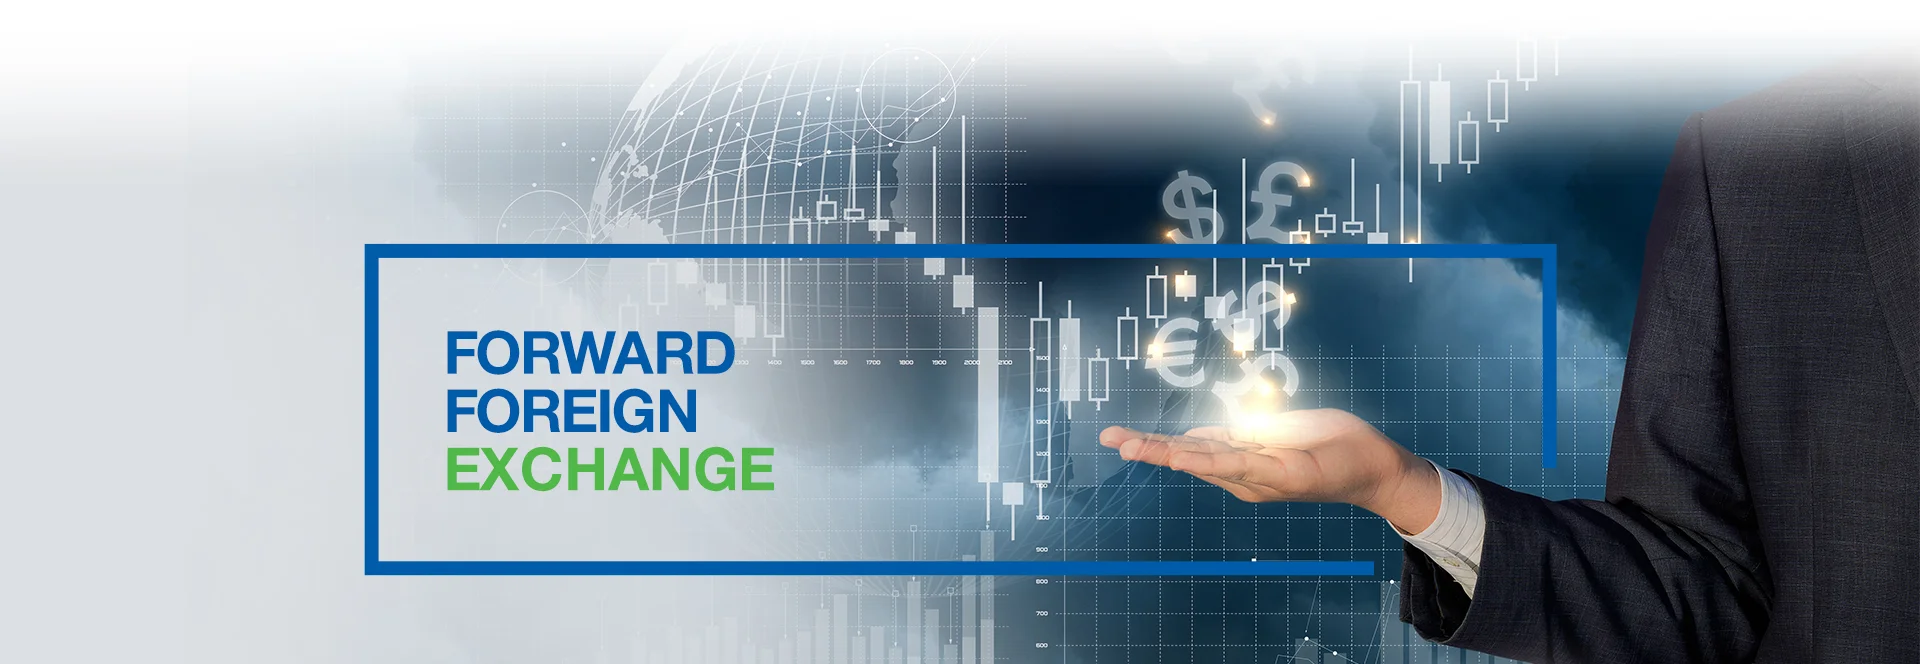 Forward Foreign Exchange (FX)